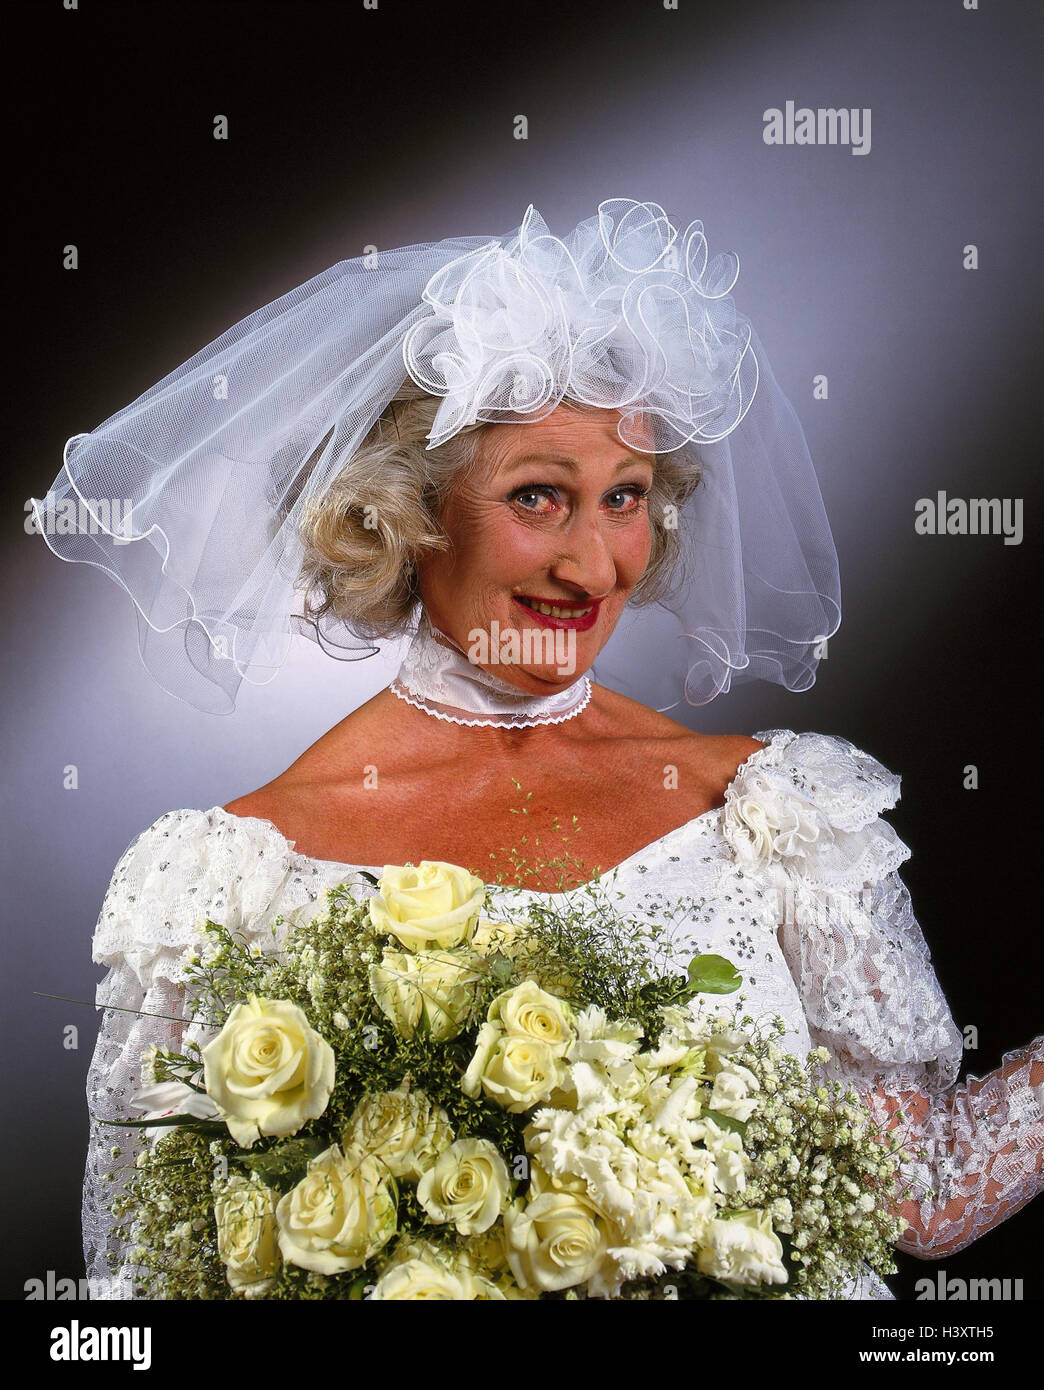 bride-senior-wedding-dress-veil-bridal-bouquet-facial-play-portrait-H3XTH5.jpg